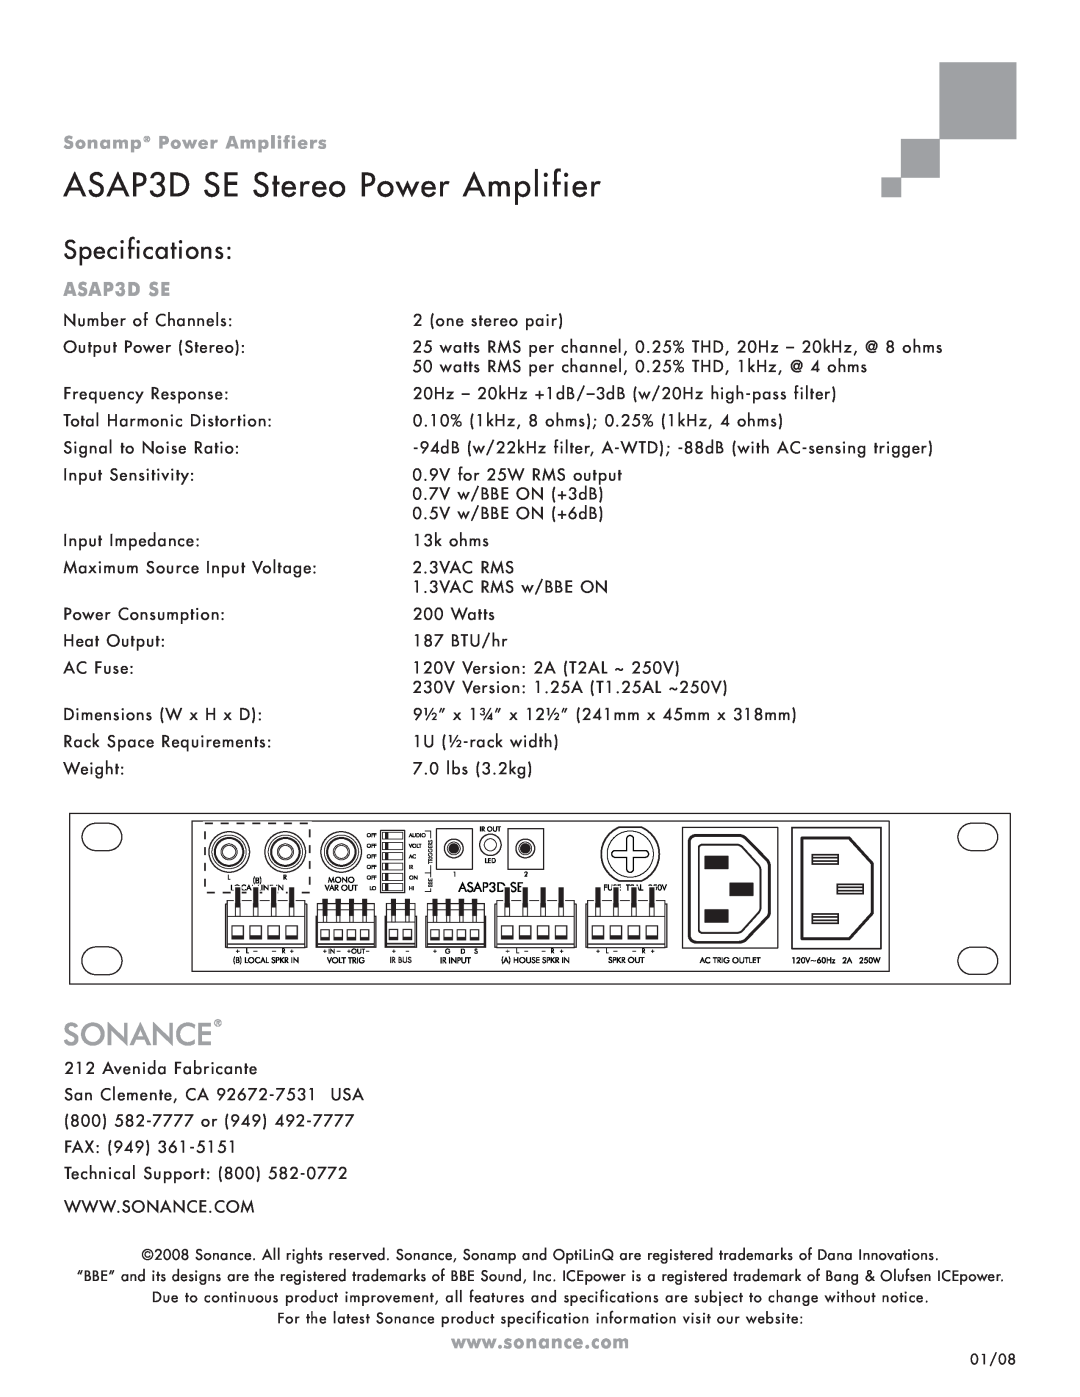 Sonance manual ASAP3D SE Stereo Power Amplifier, Specifications, Sonamp Power Amplifiers 